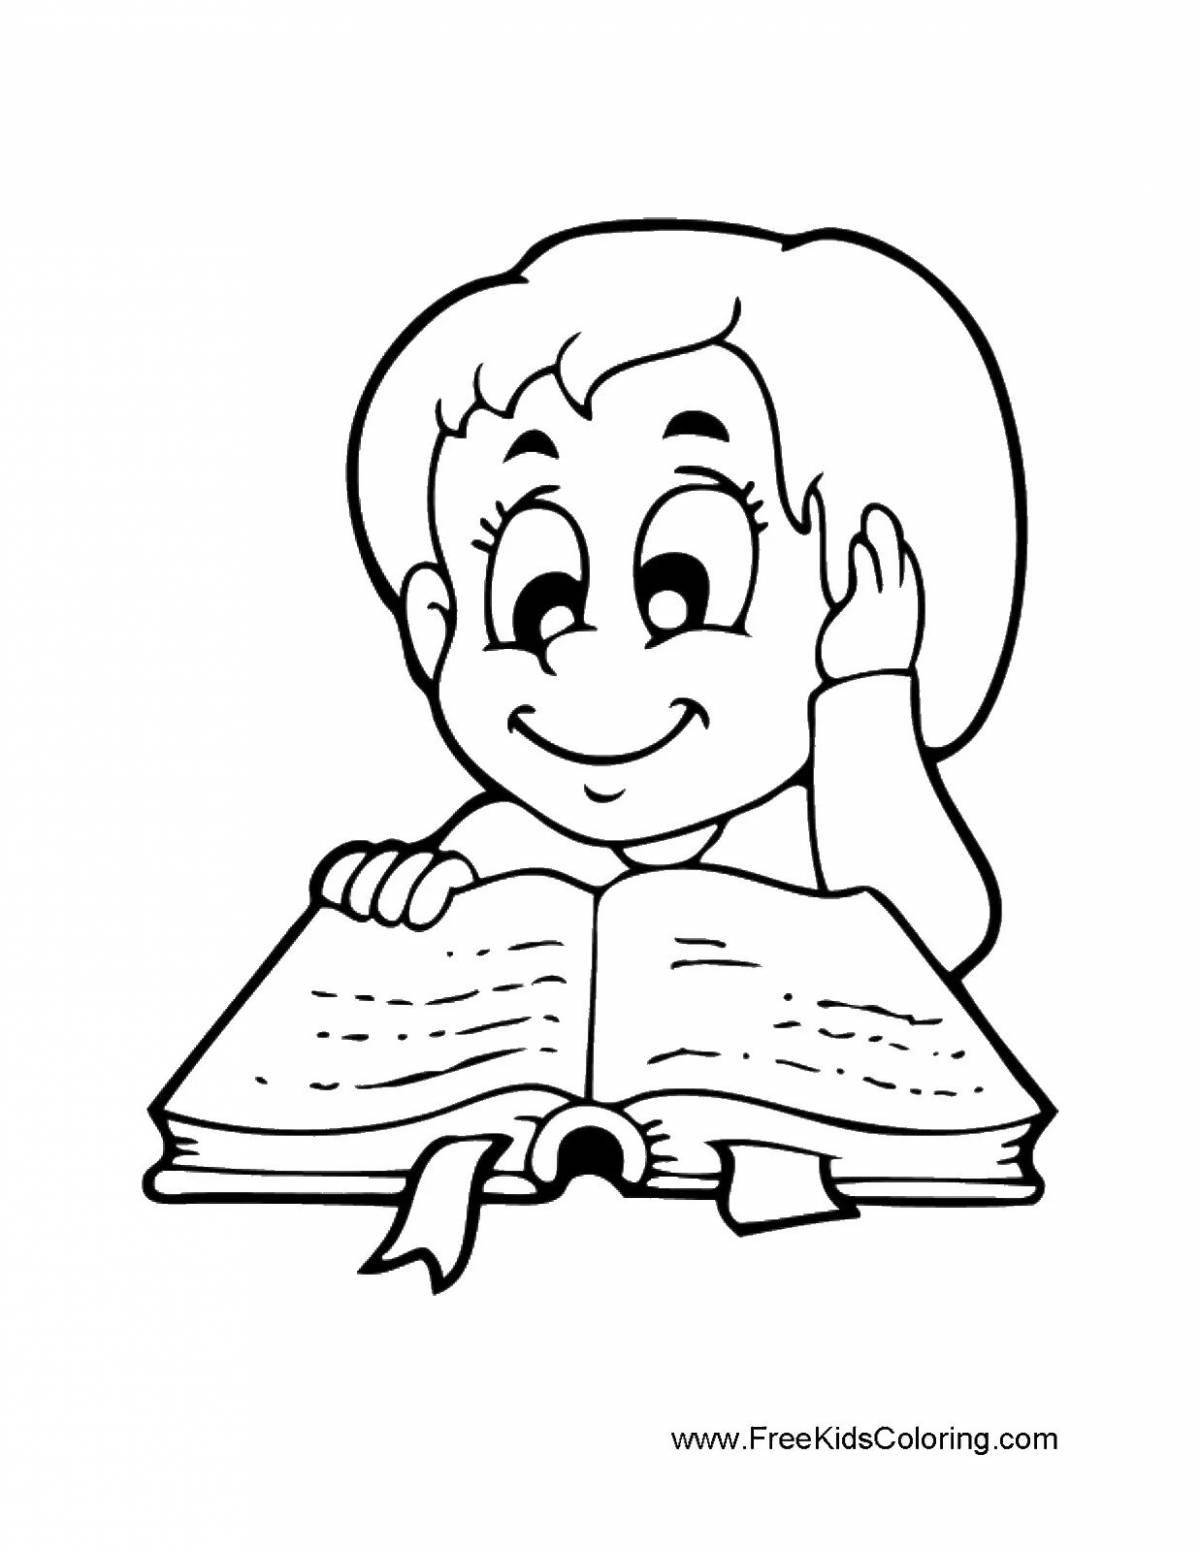 A dreamy girl reading a coloring book